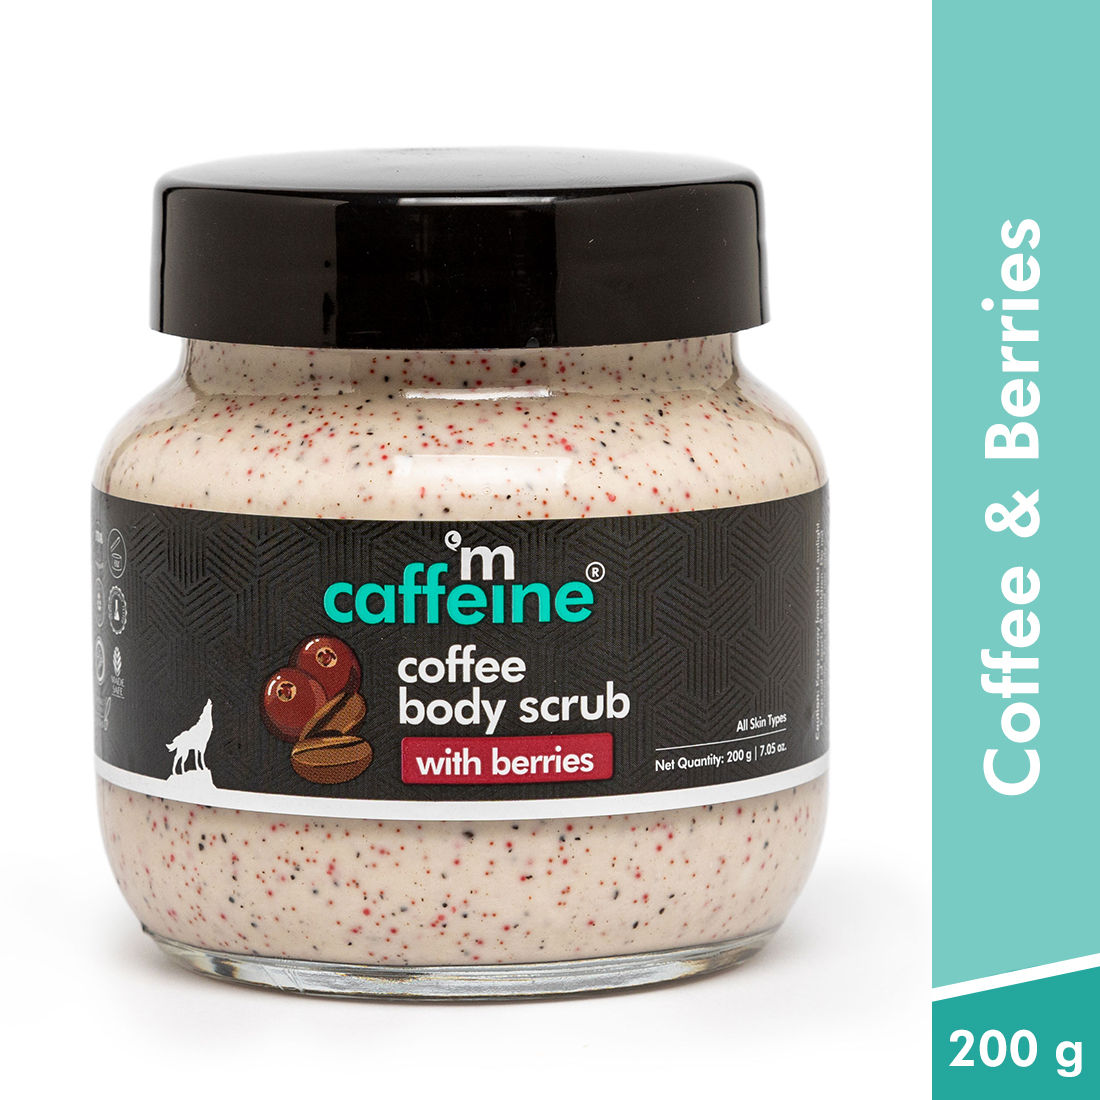 MCaffeine Creamy Coffee Body Scrub with Berries - Moisturizes, Exfoliates & Removes Tan & Dry Skin